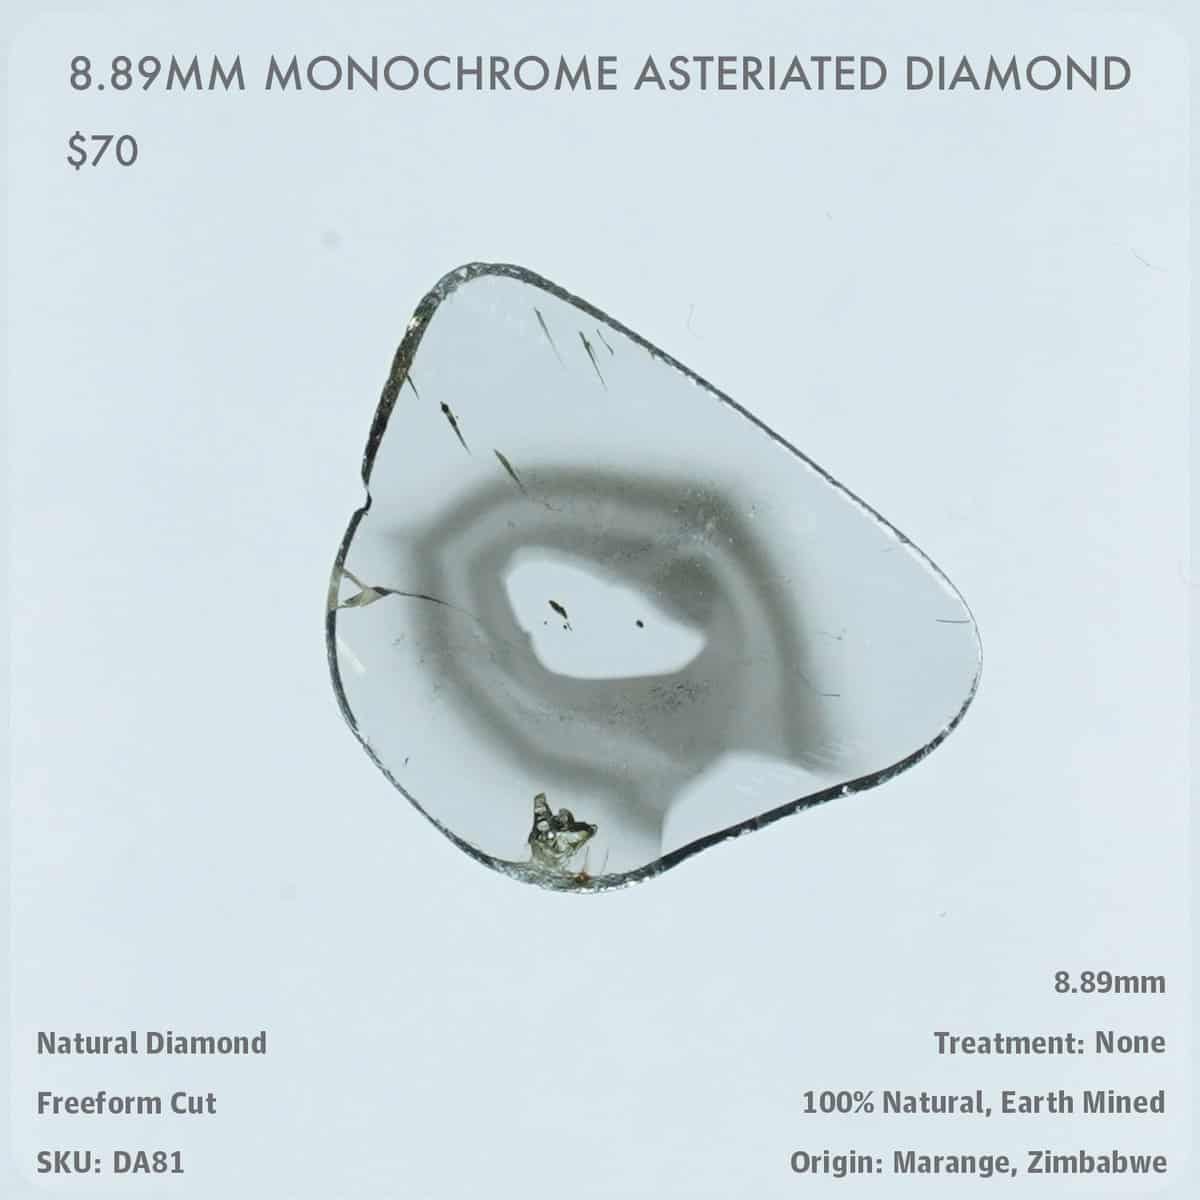 8.89mm Monochrome Asteriated Diamond